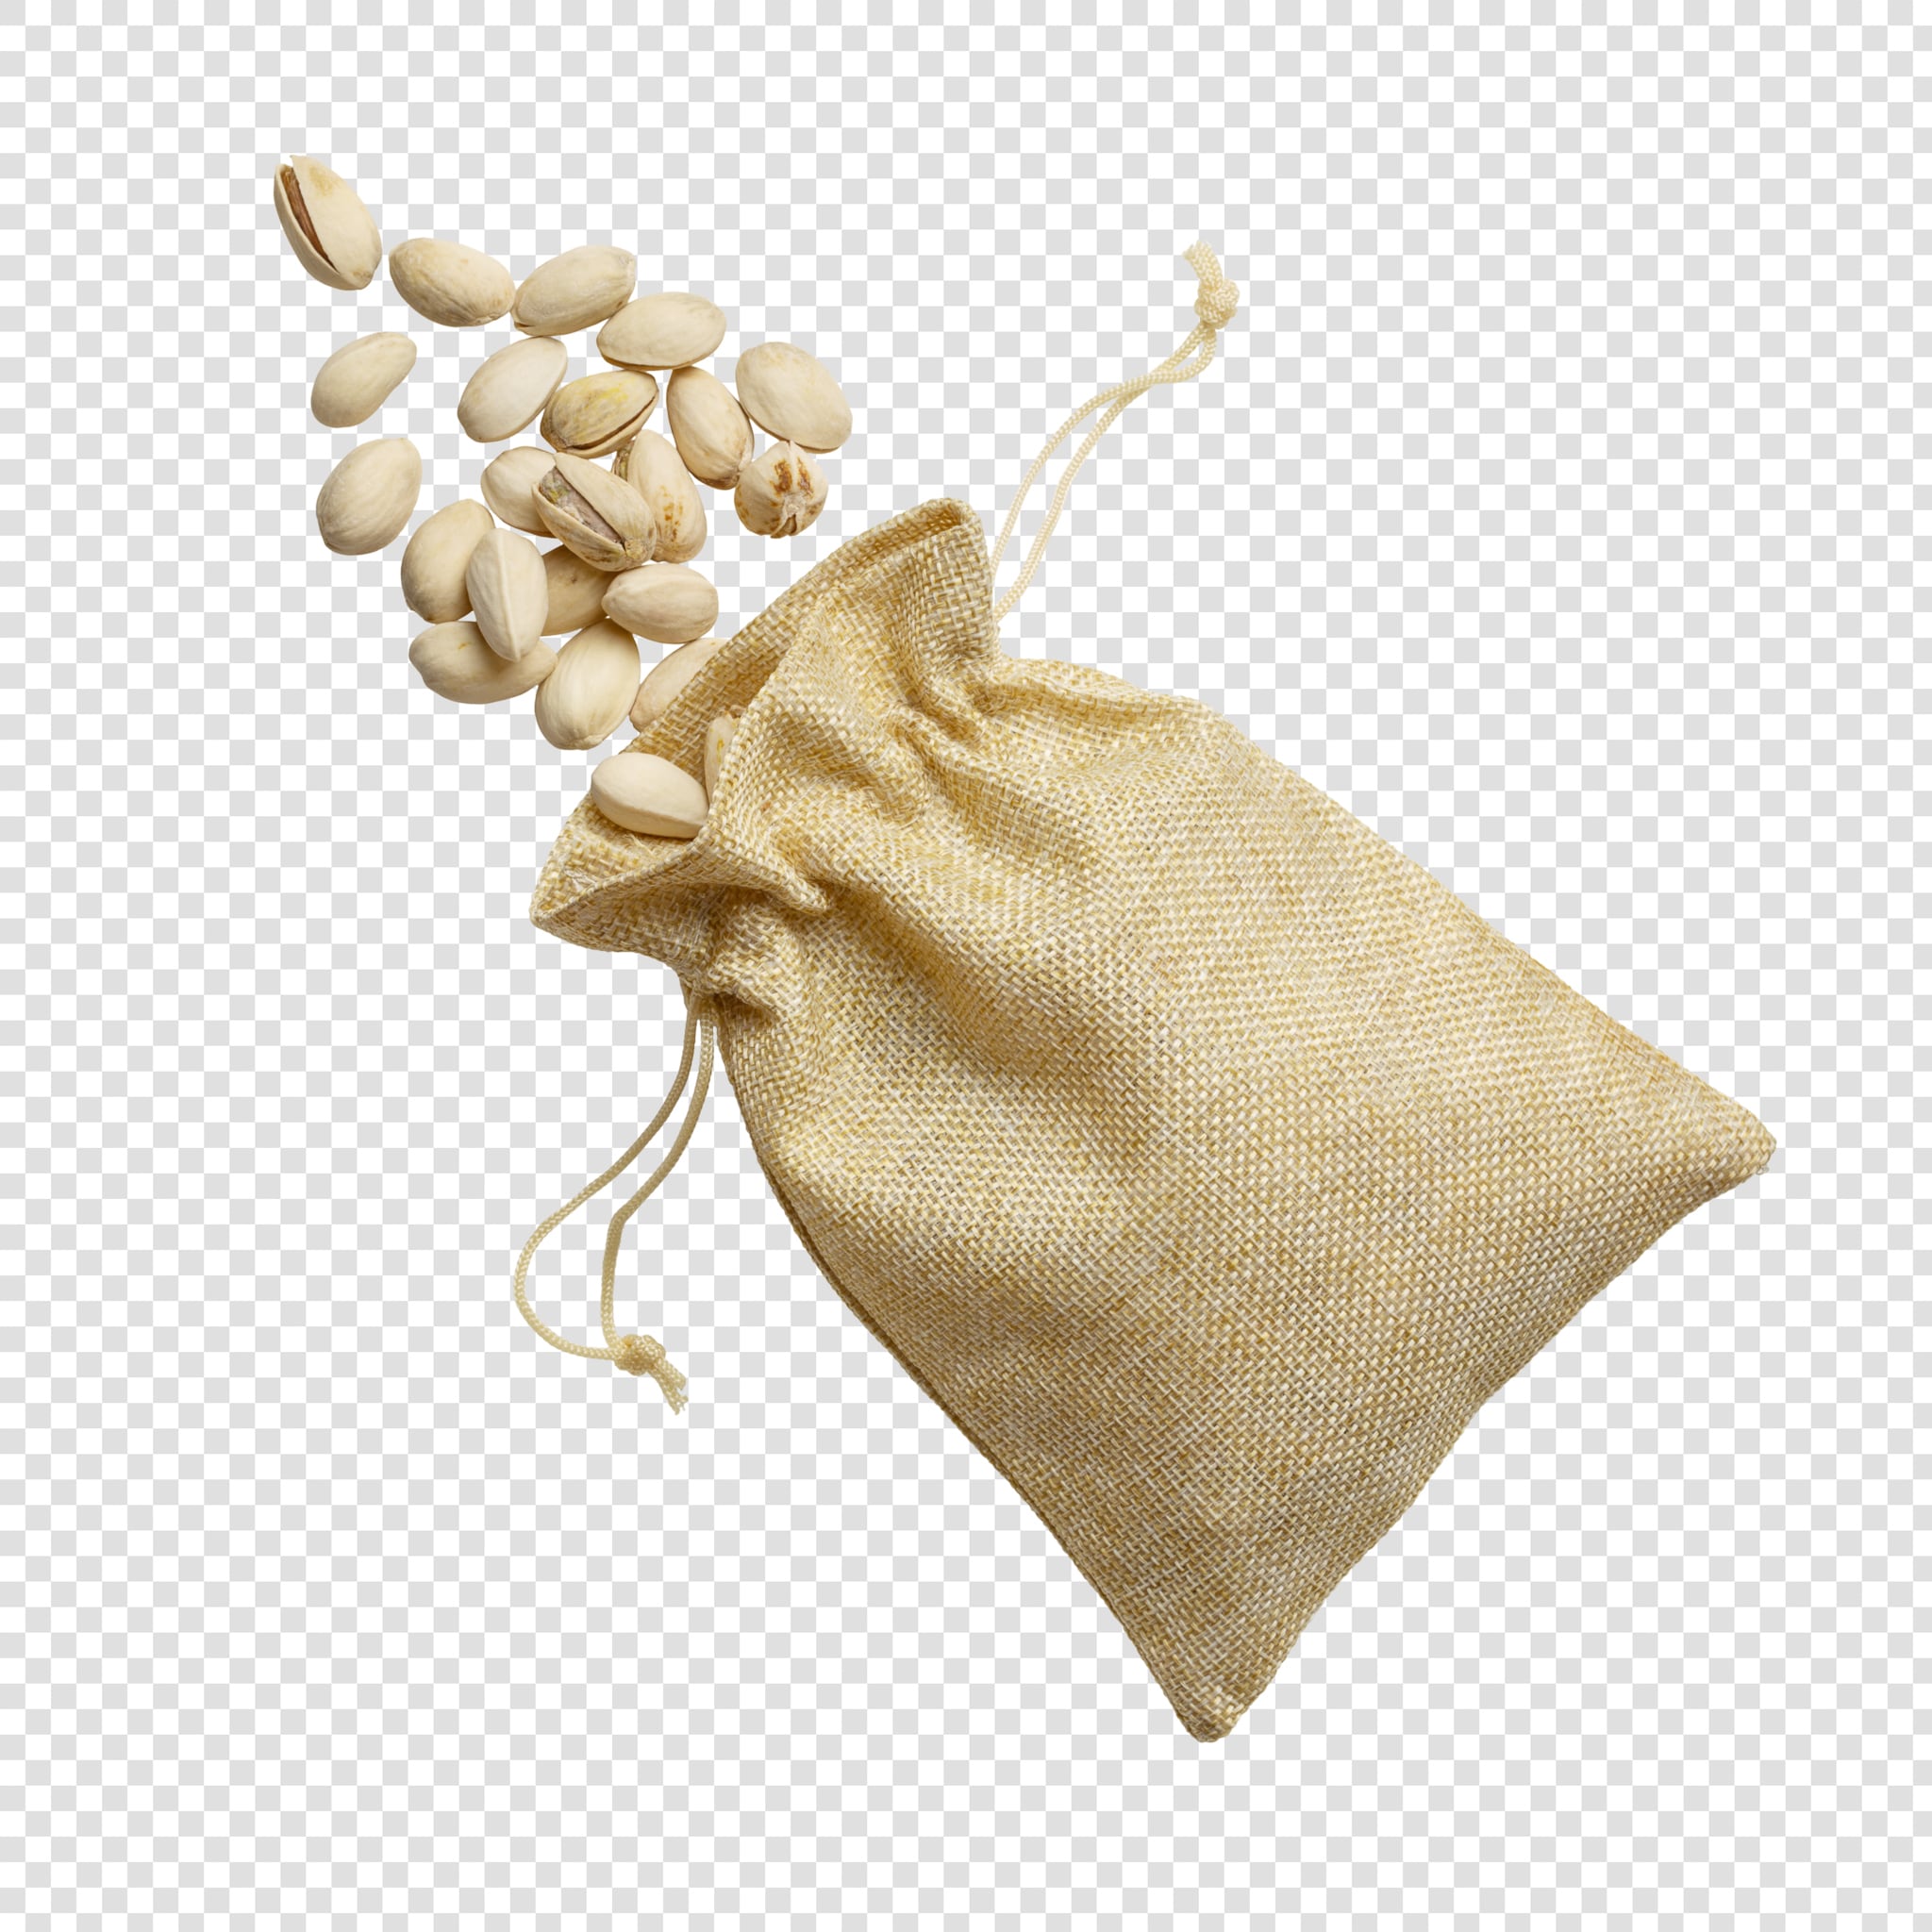 Bag of pistachios PSD image on transparent background